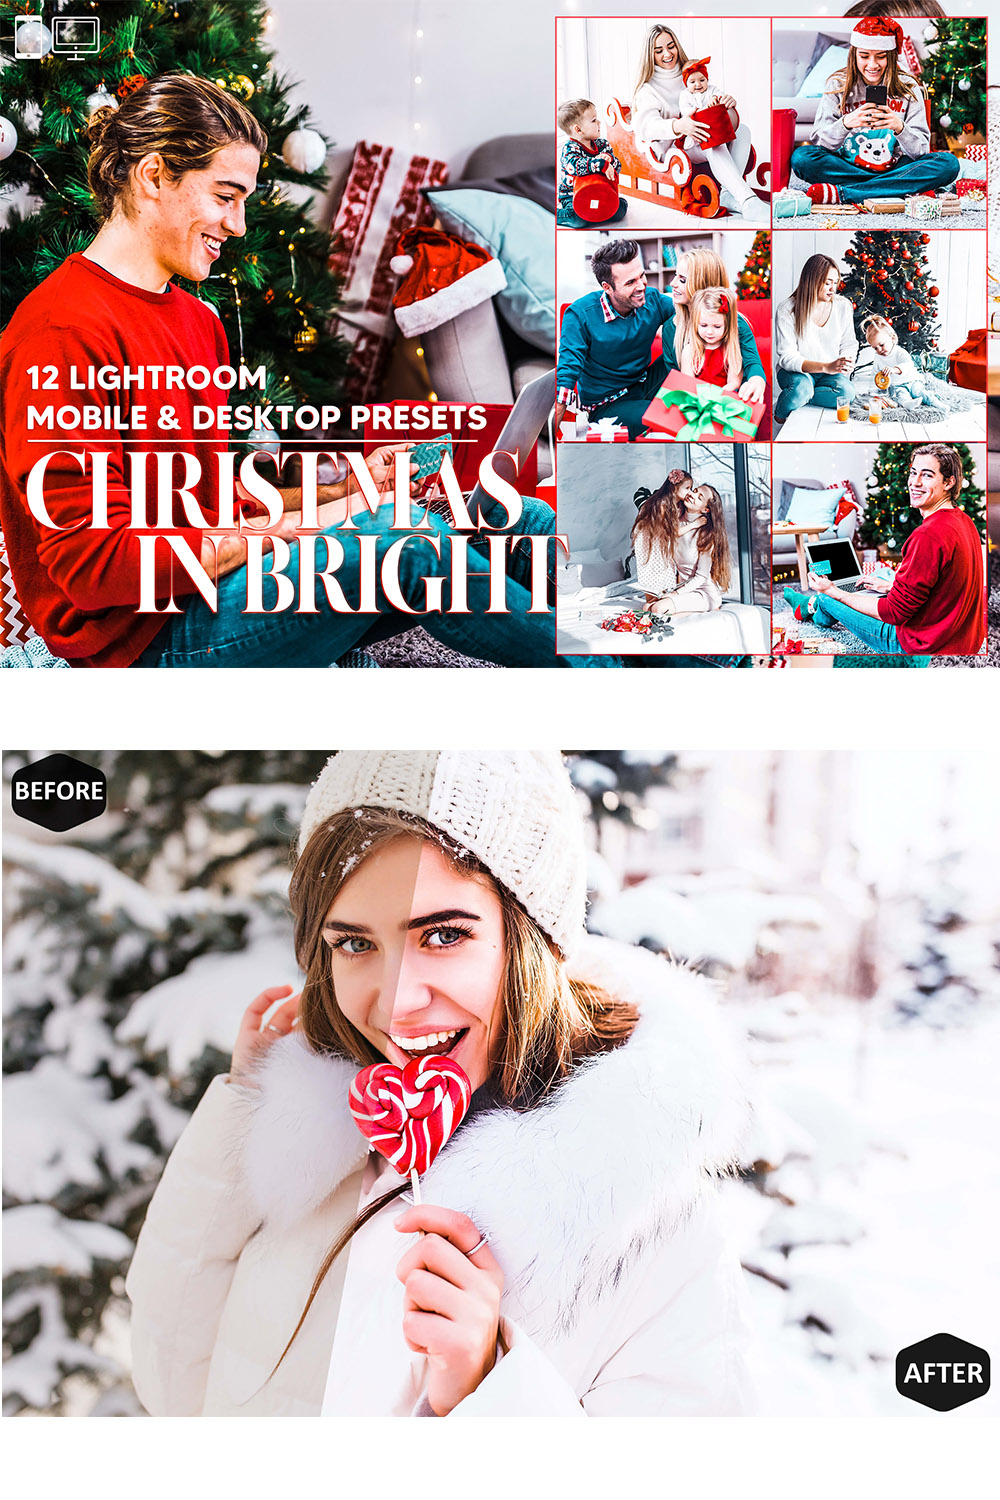 12 Christmas In Bright Lightroom Presets, Xmas Mobile Preset, Holiday Desktop, Lifestyle Theme For Instagram Blogger LR Filter DNG Portrait pinterest preview image.